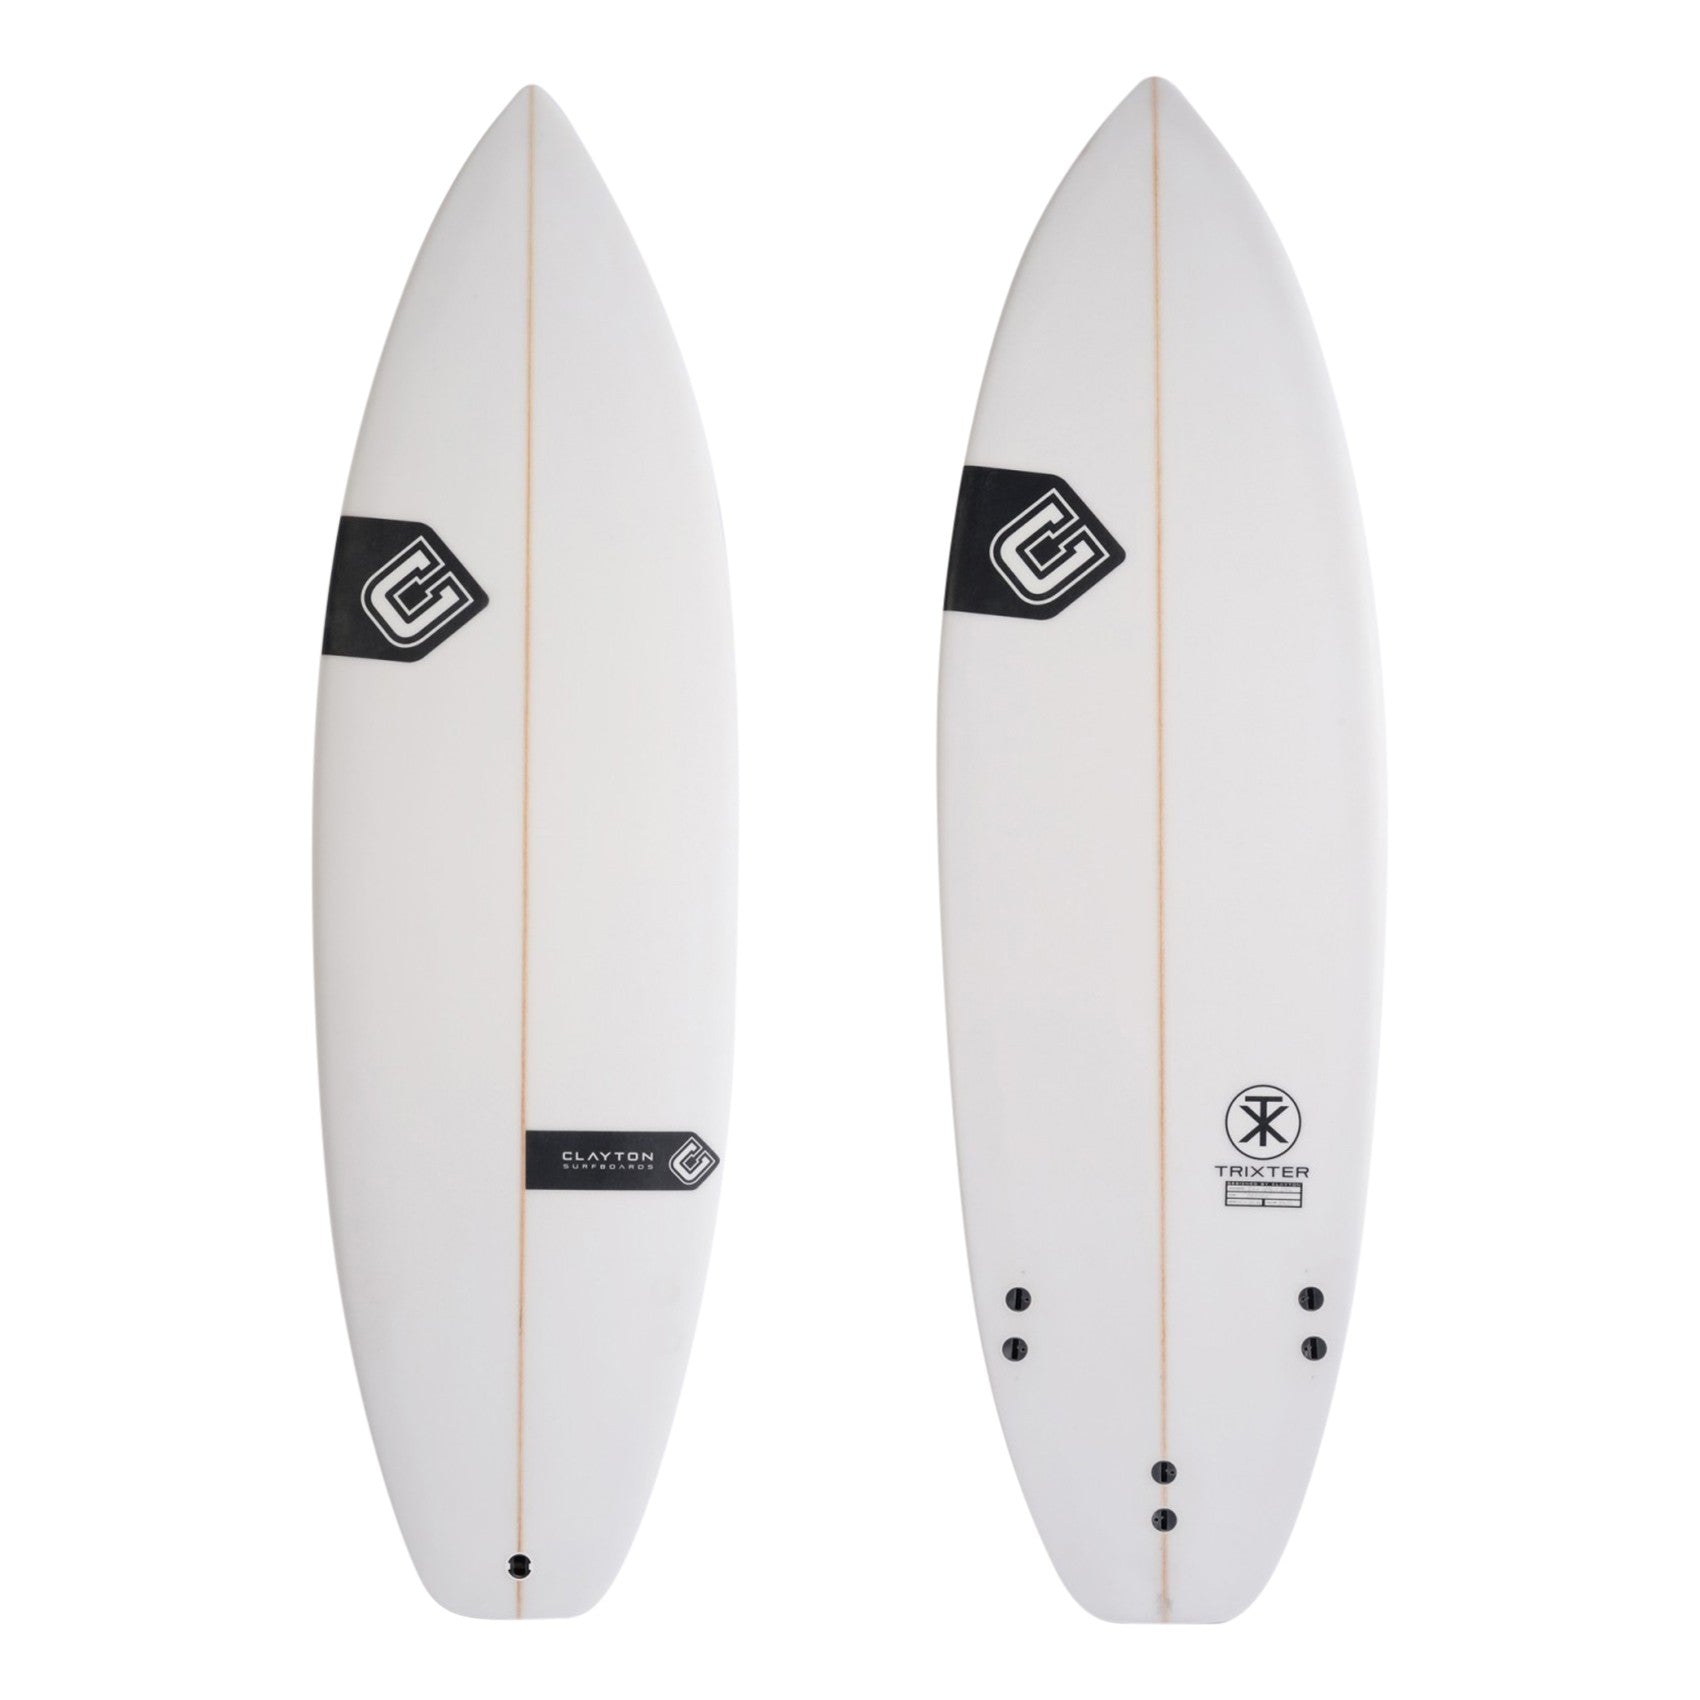 CLAYTON Surfboards - Trickster (PU) Fcs - 5'6